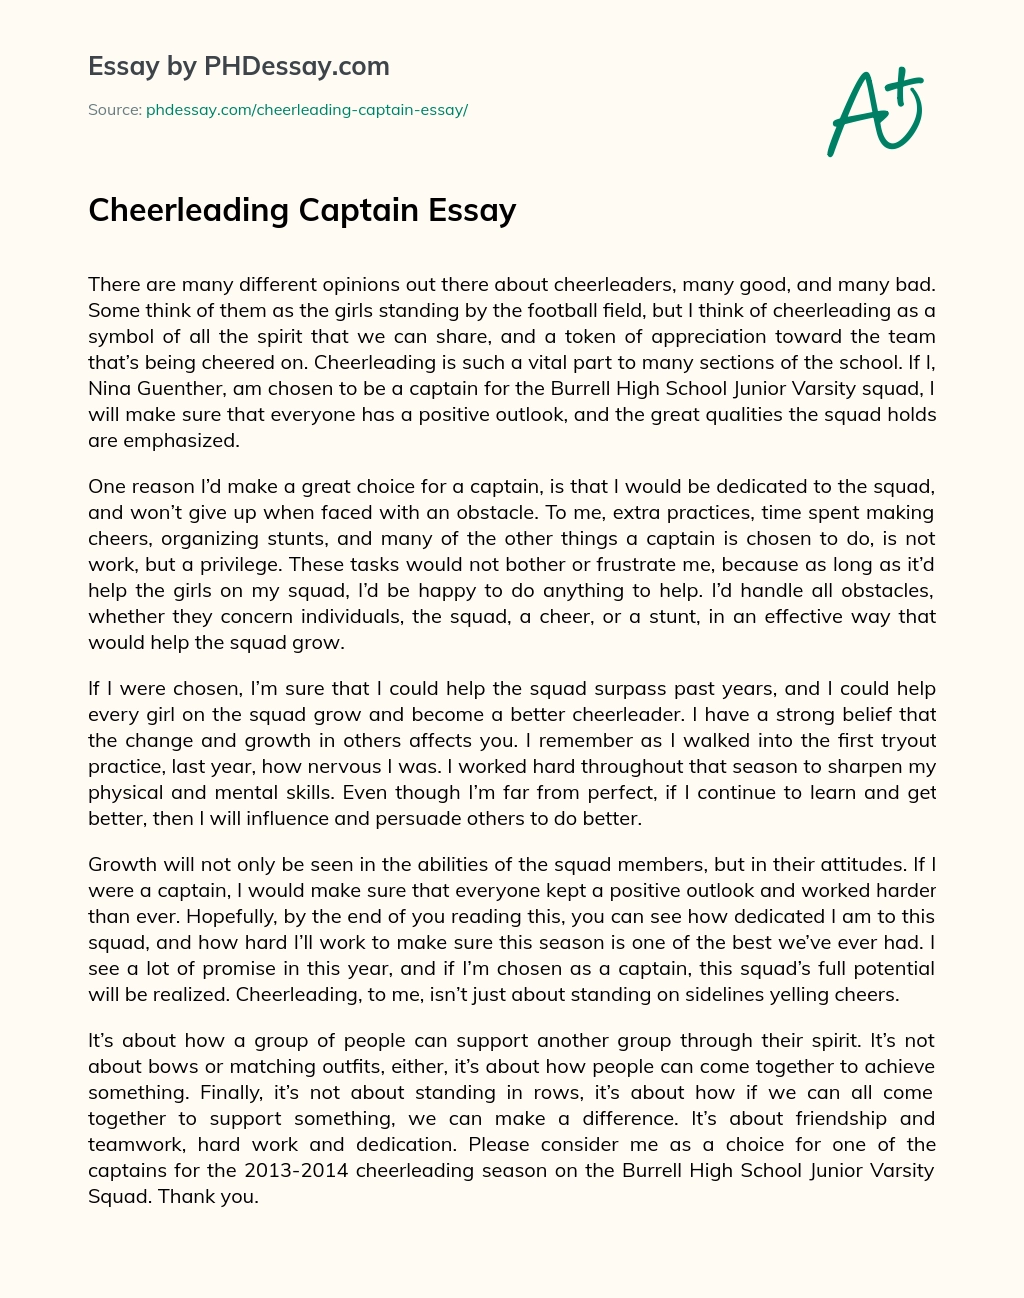 Cheerleading Captain Essay essay